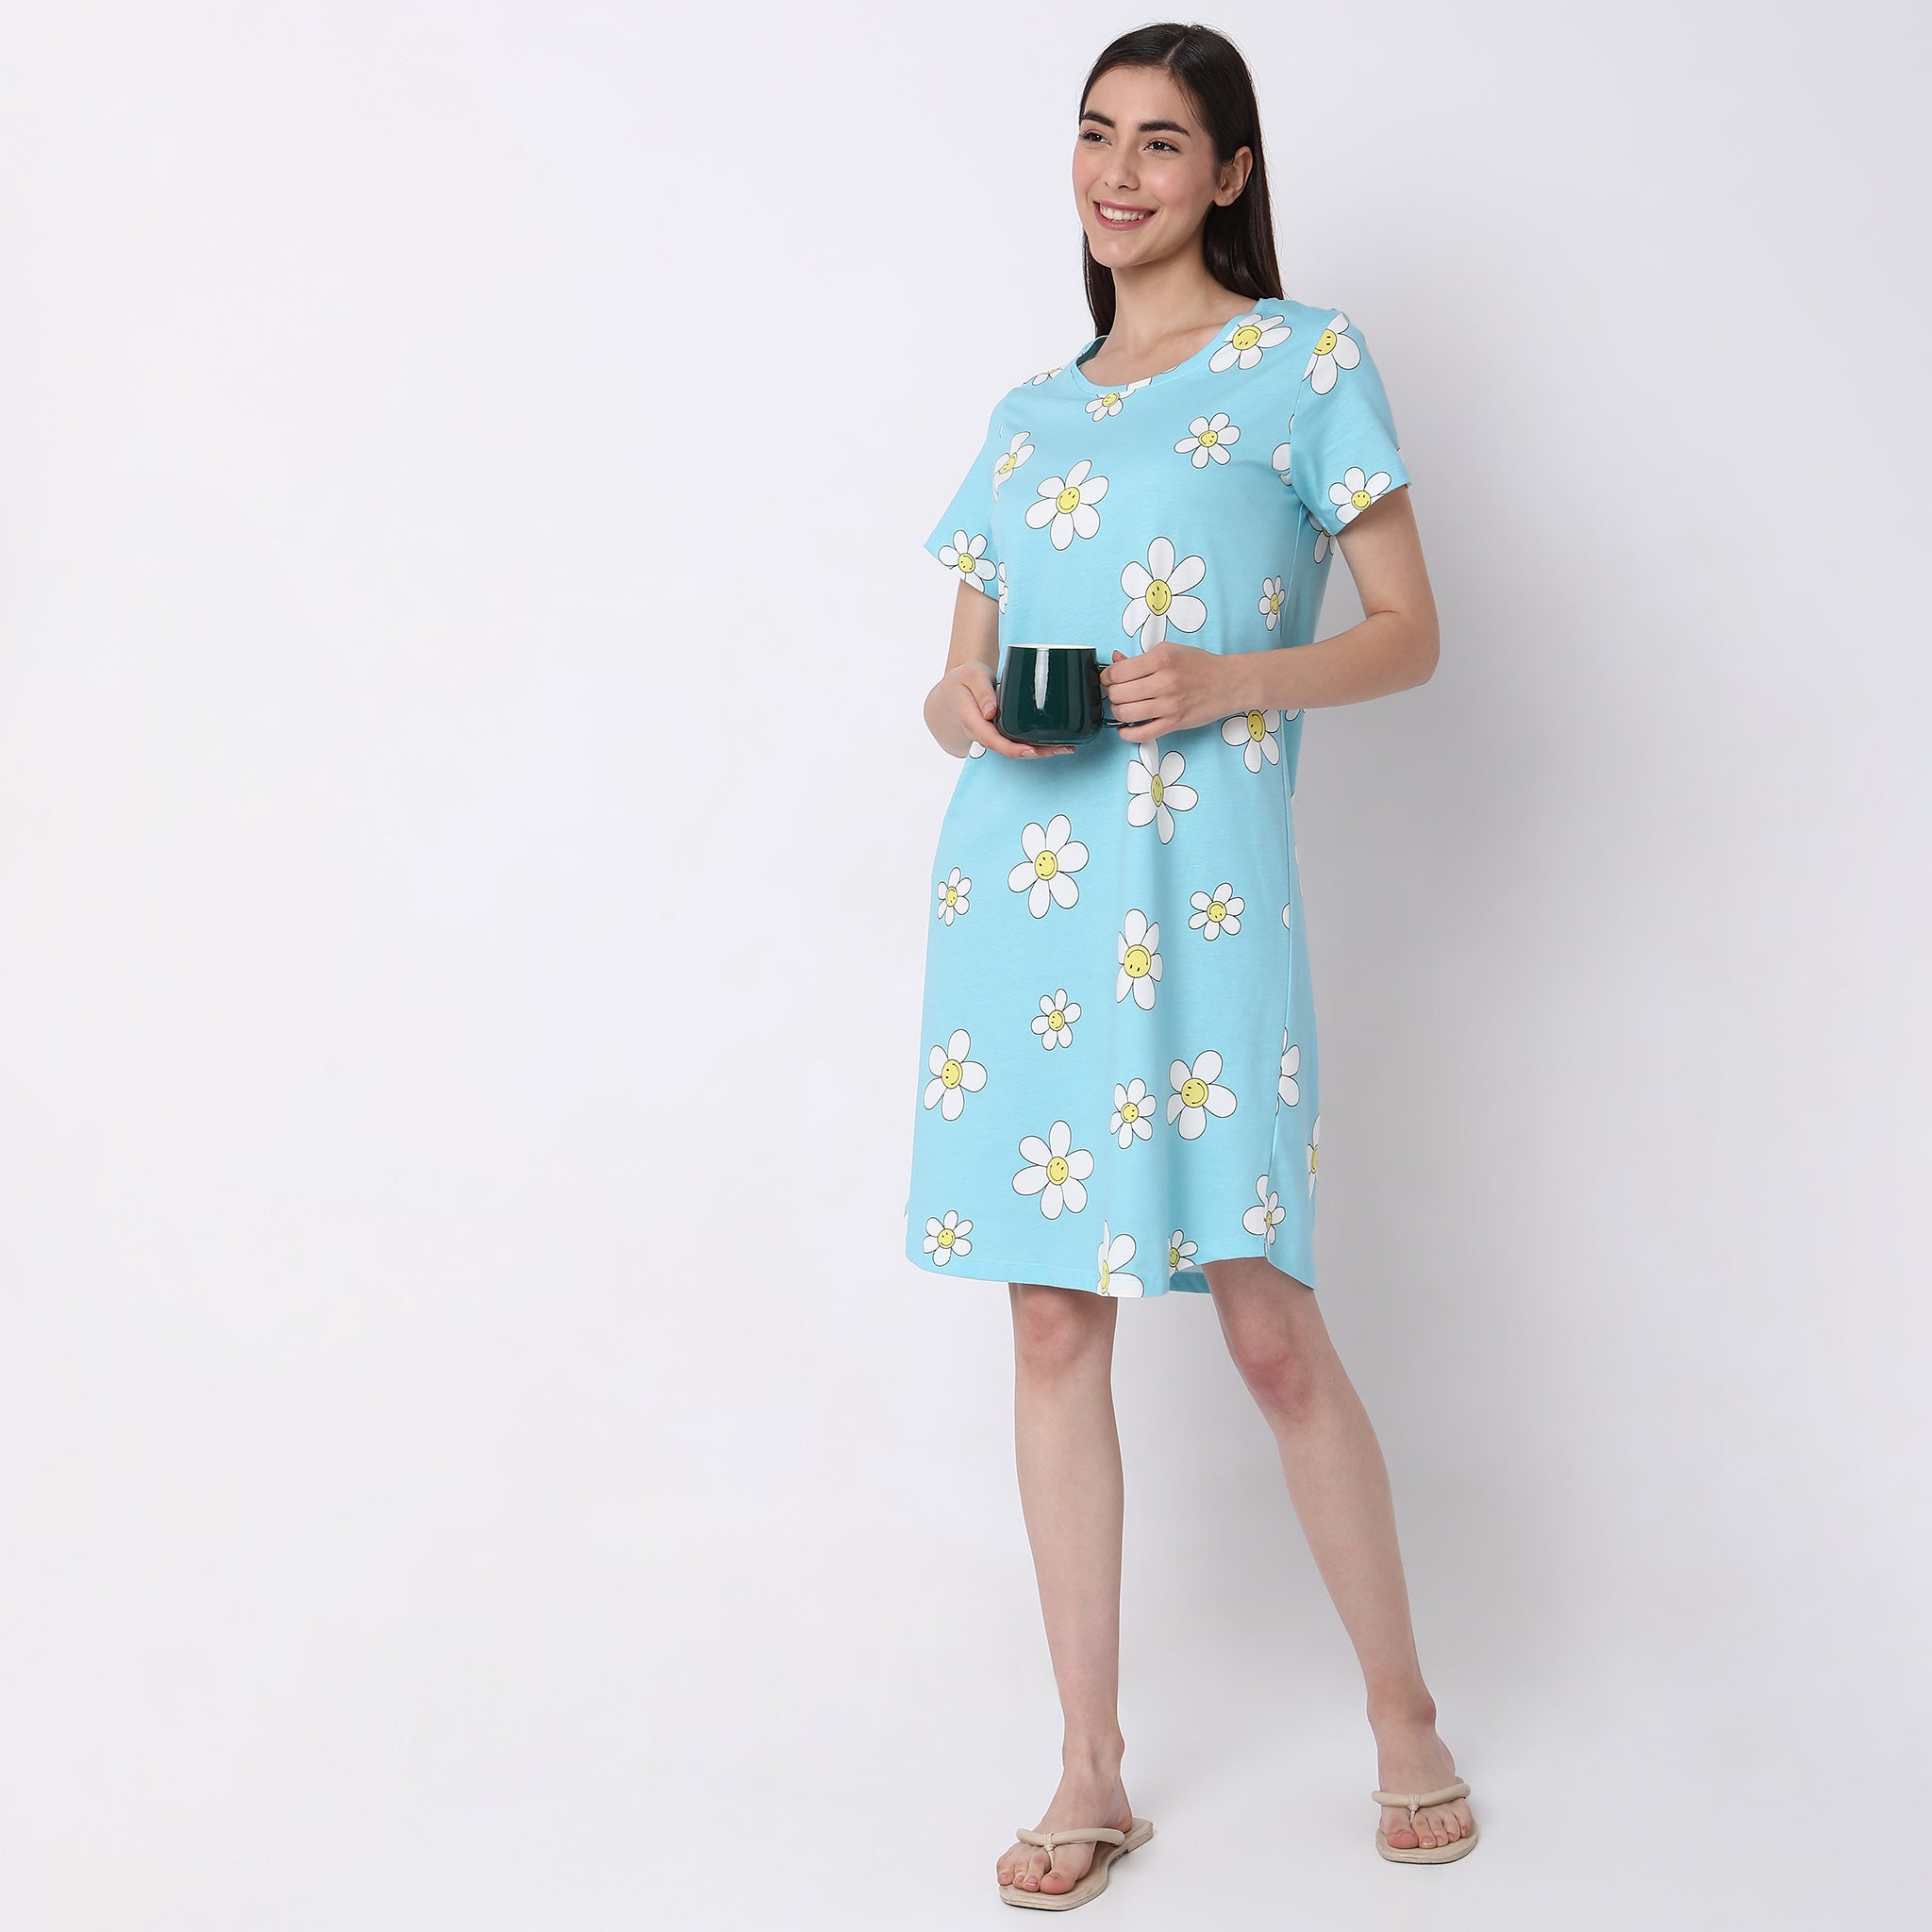 10 FREE Graduation Dress Sewing Patterns - MHS Blog